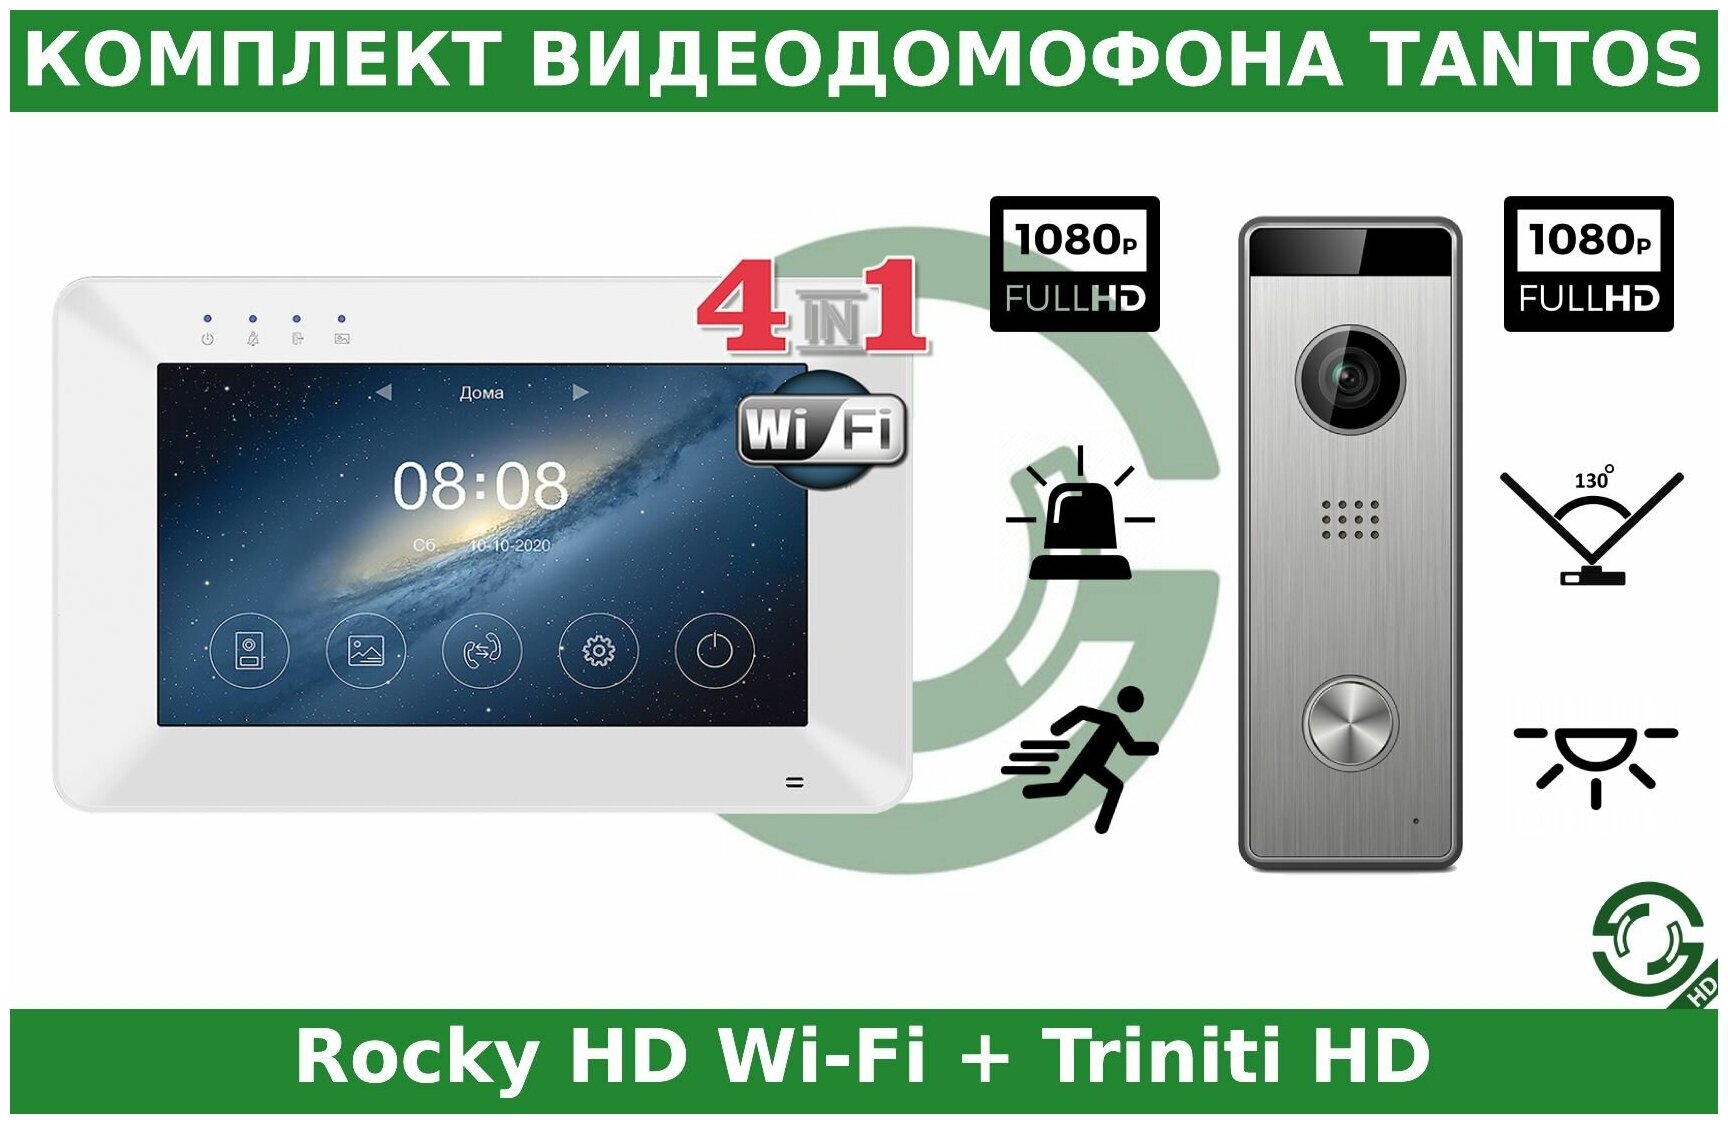 Комплект видеодомофона Tantos Rocky HD Wi-Fi и Triniti HD